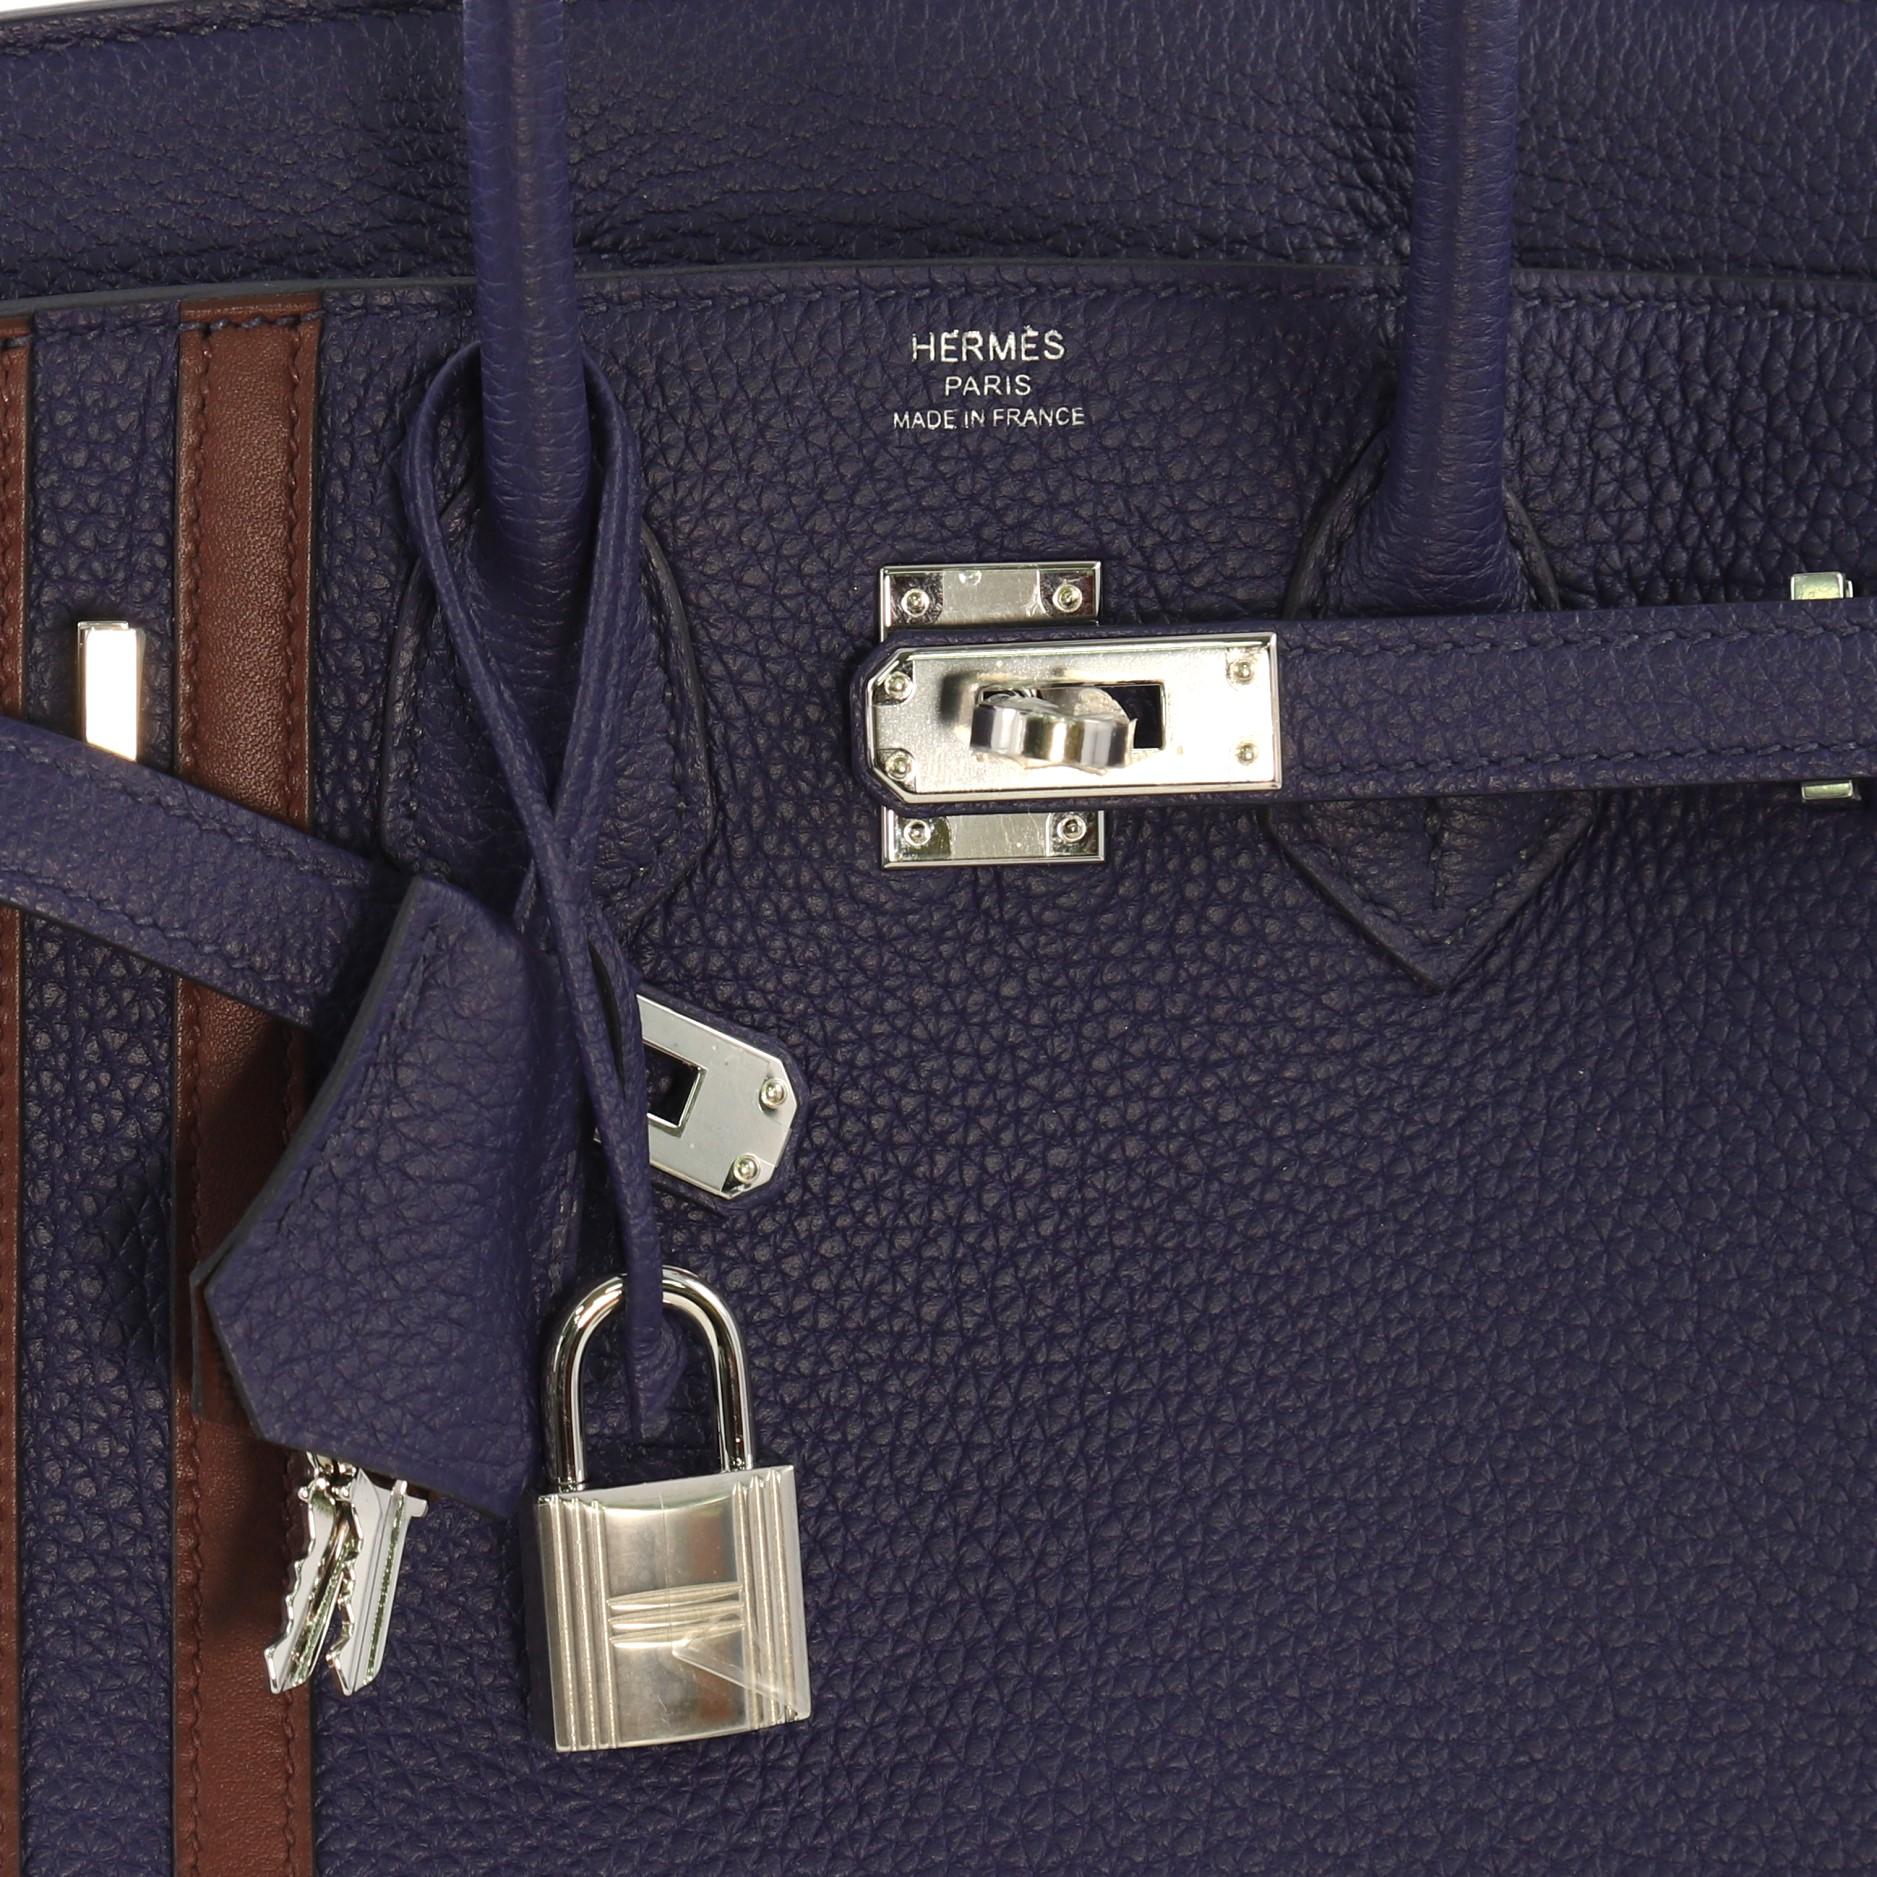 Hermes Officier Birkin Handbag Limited Edition Togo with Swift 30 1